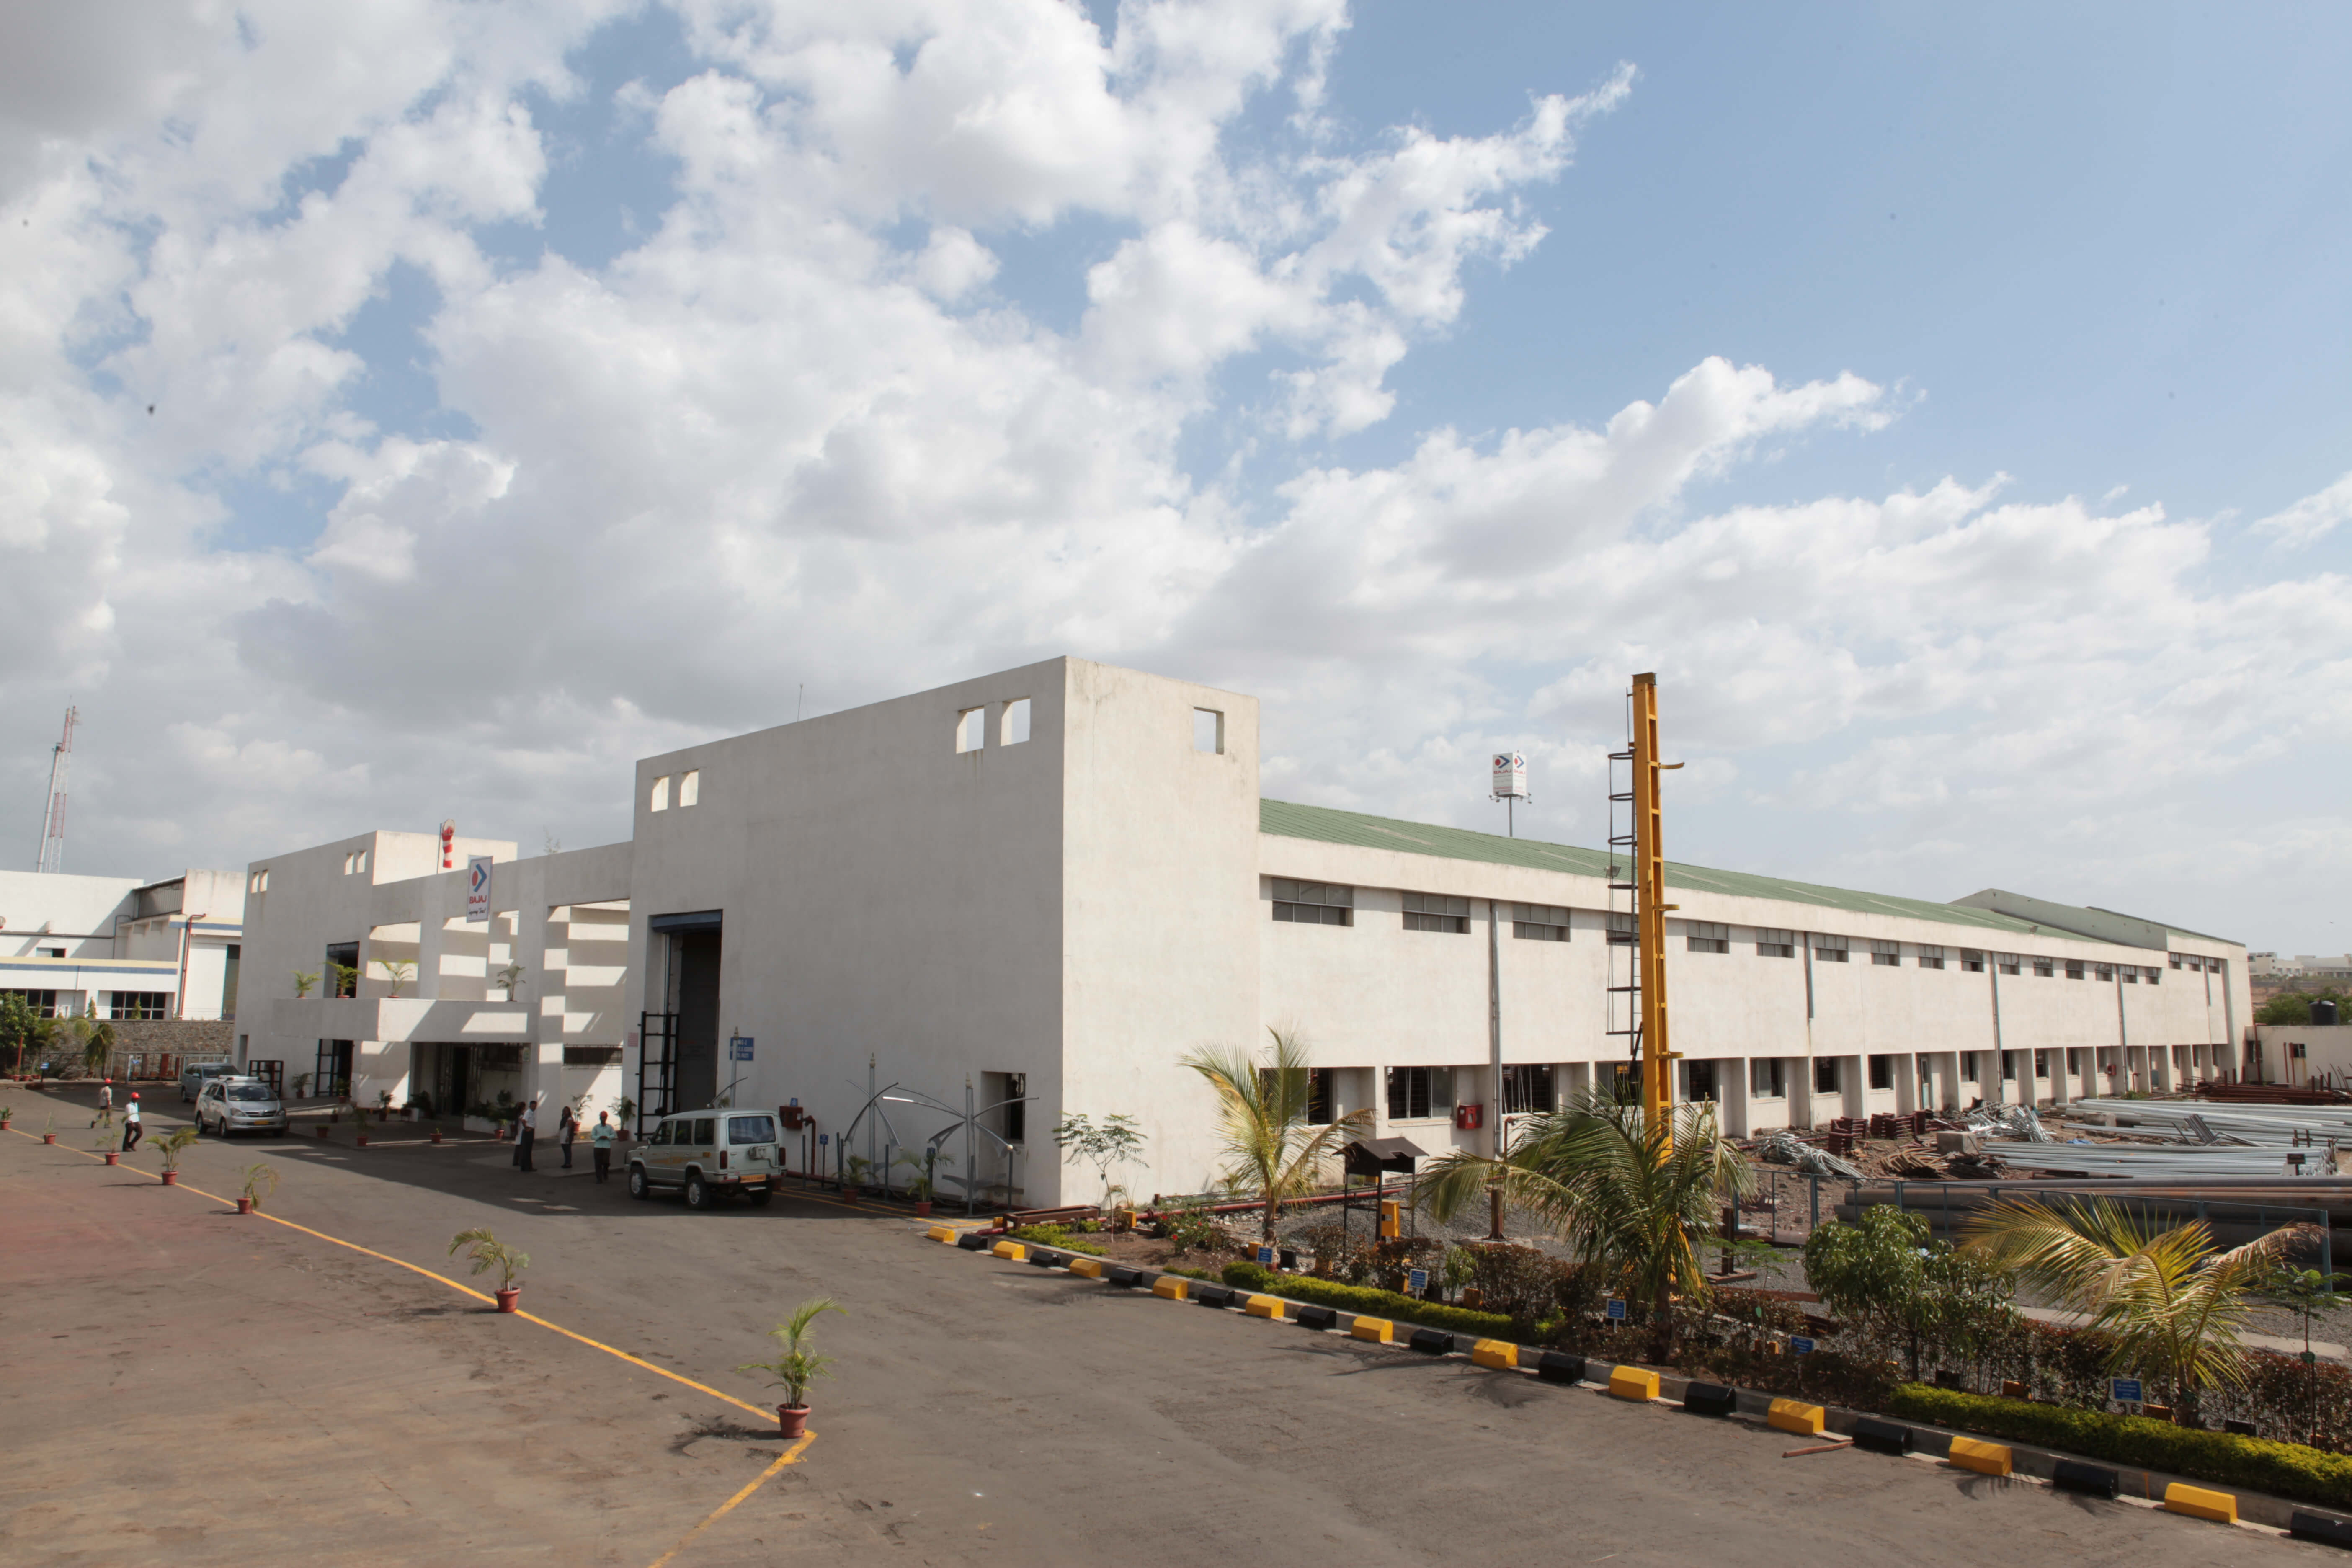 Bajaj Ranjangaon manufacturing facility